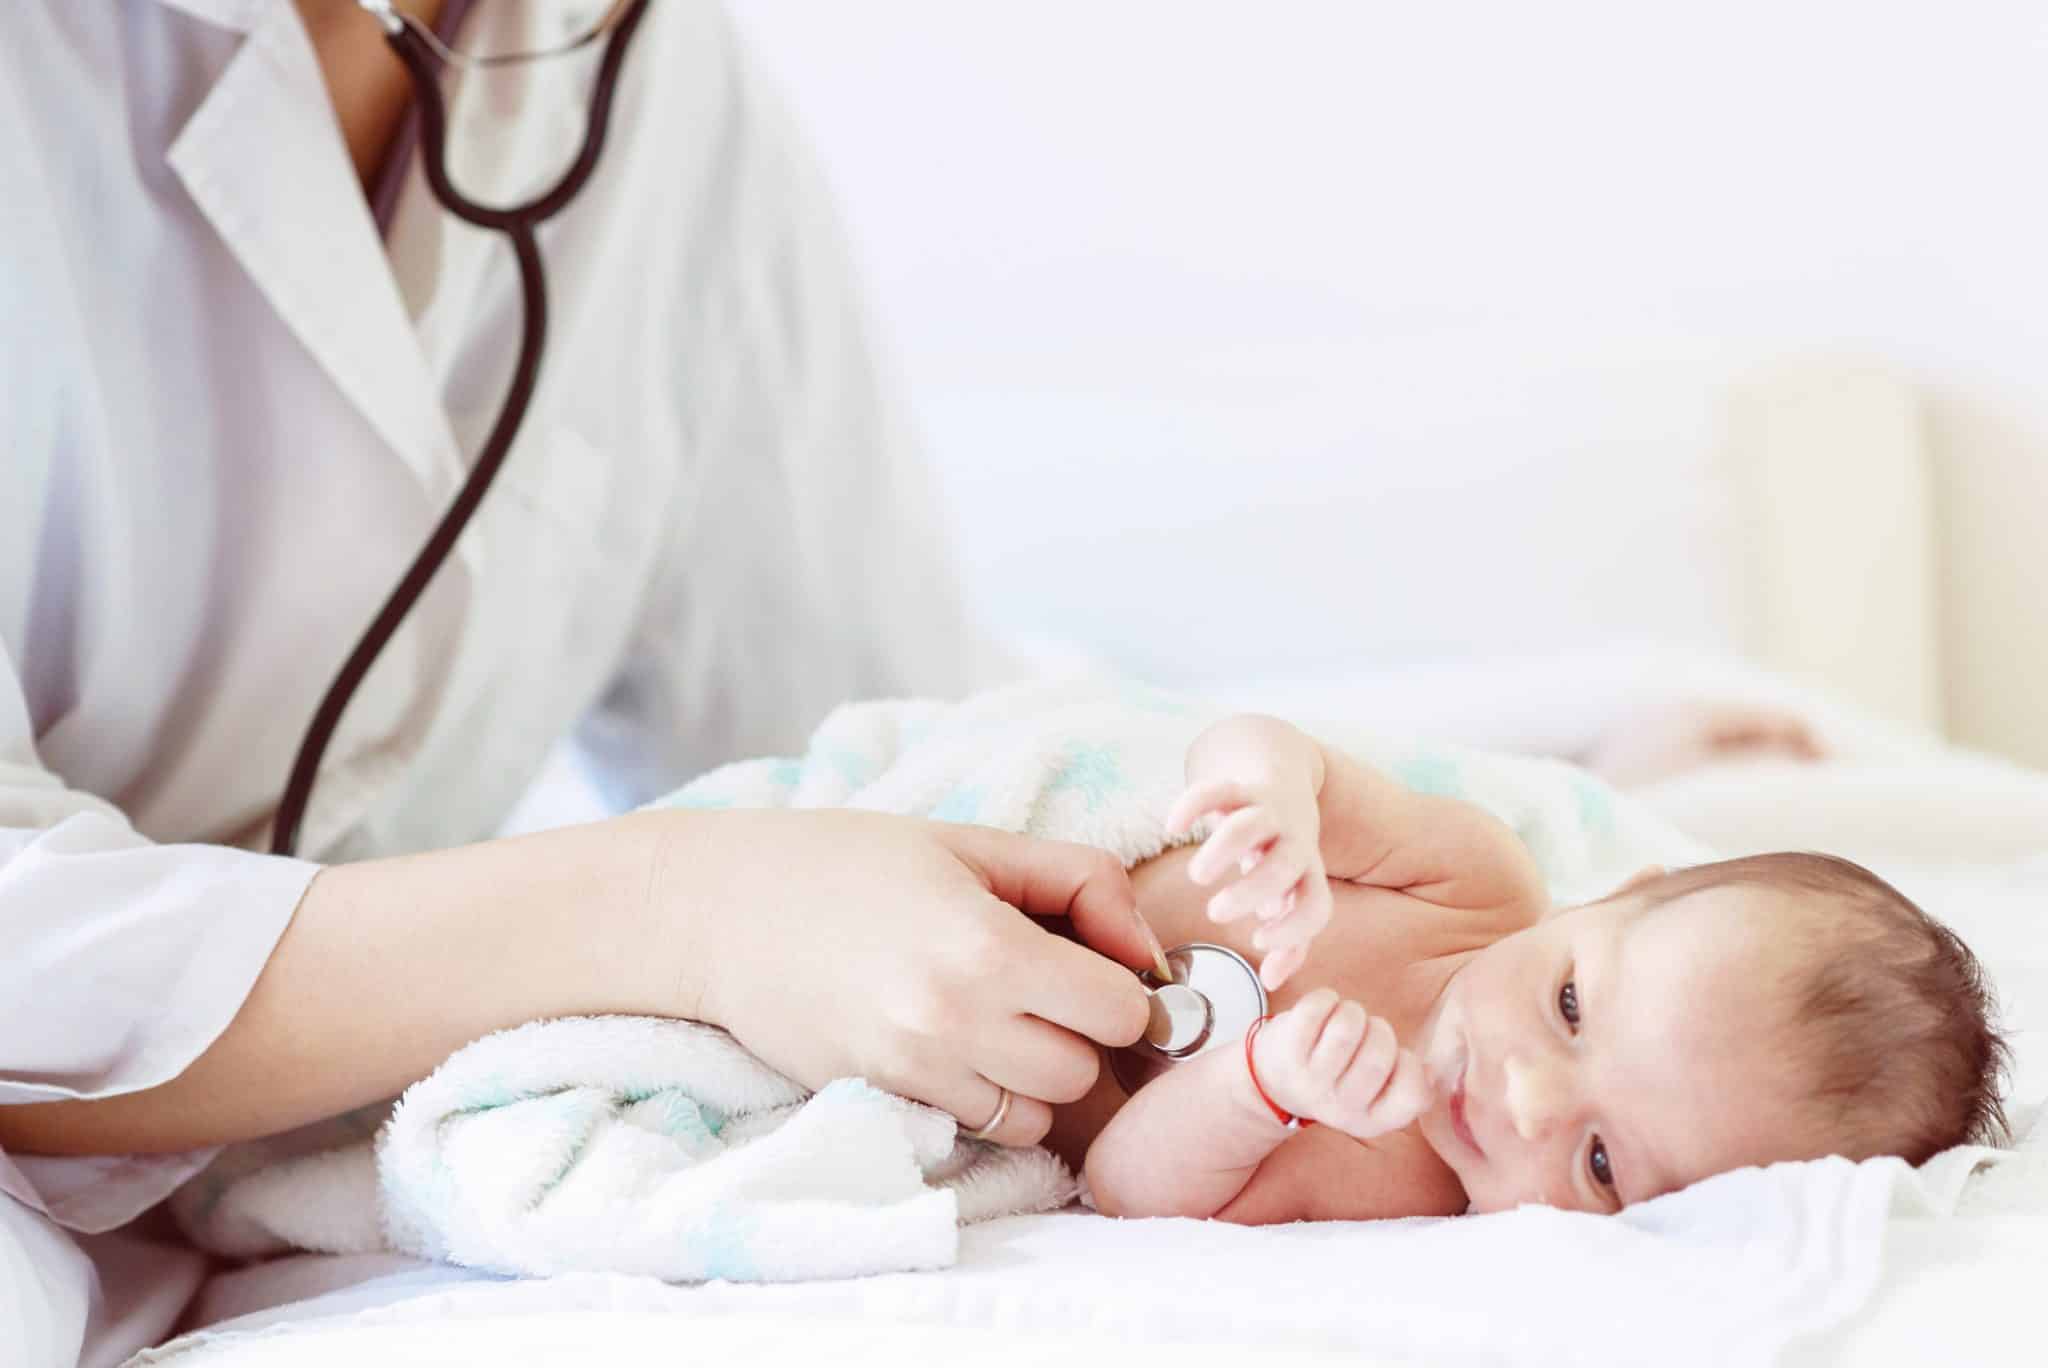 Newborn baby receiving pediatric care from pediatrician.